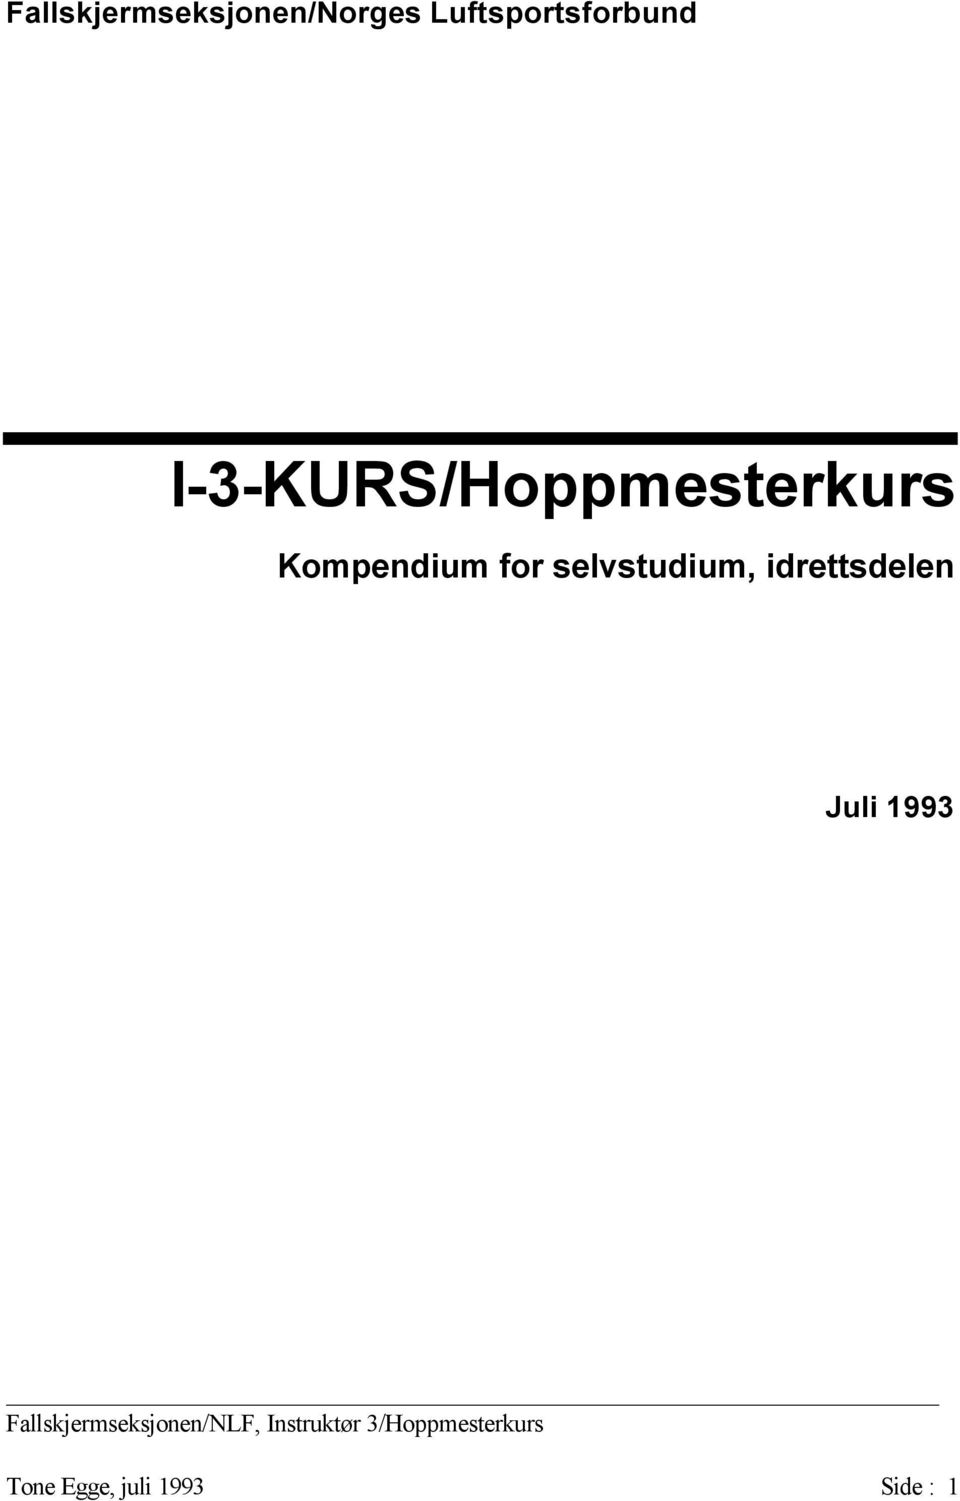 I-3-KURS/Hoppmesterkurs Kompendium